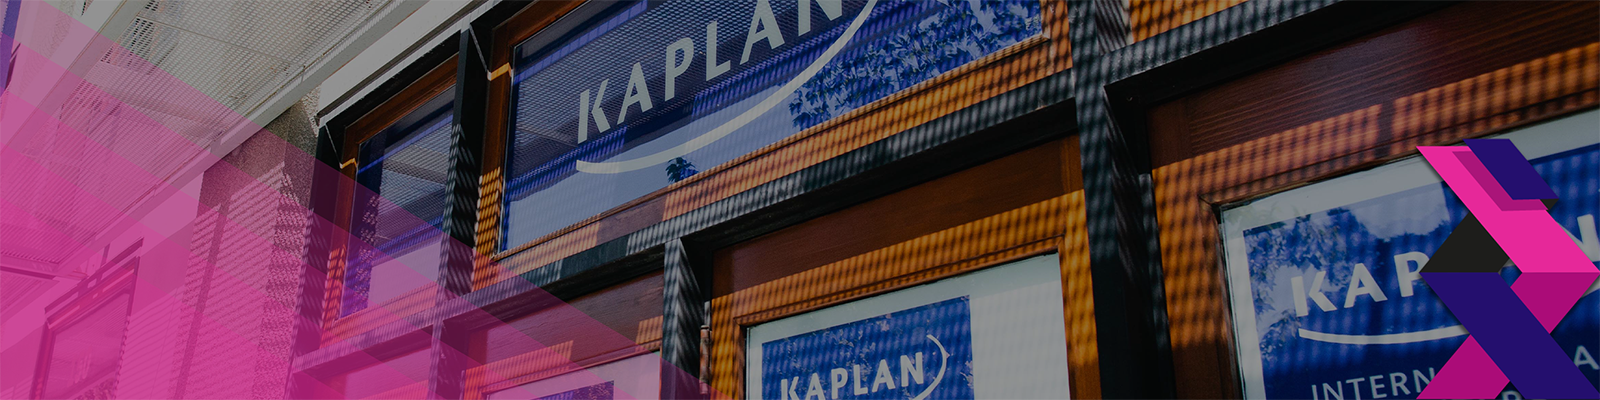 Kaplan International Languages - London görseli